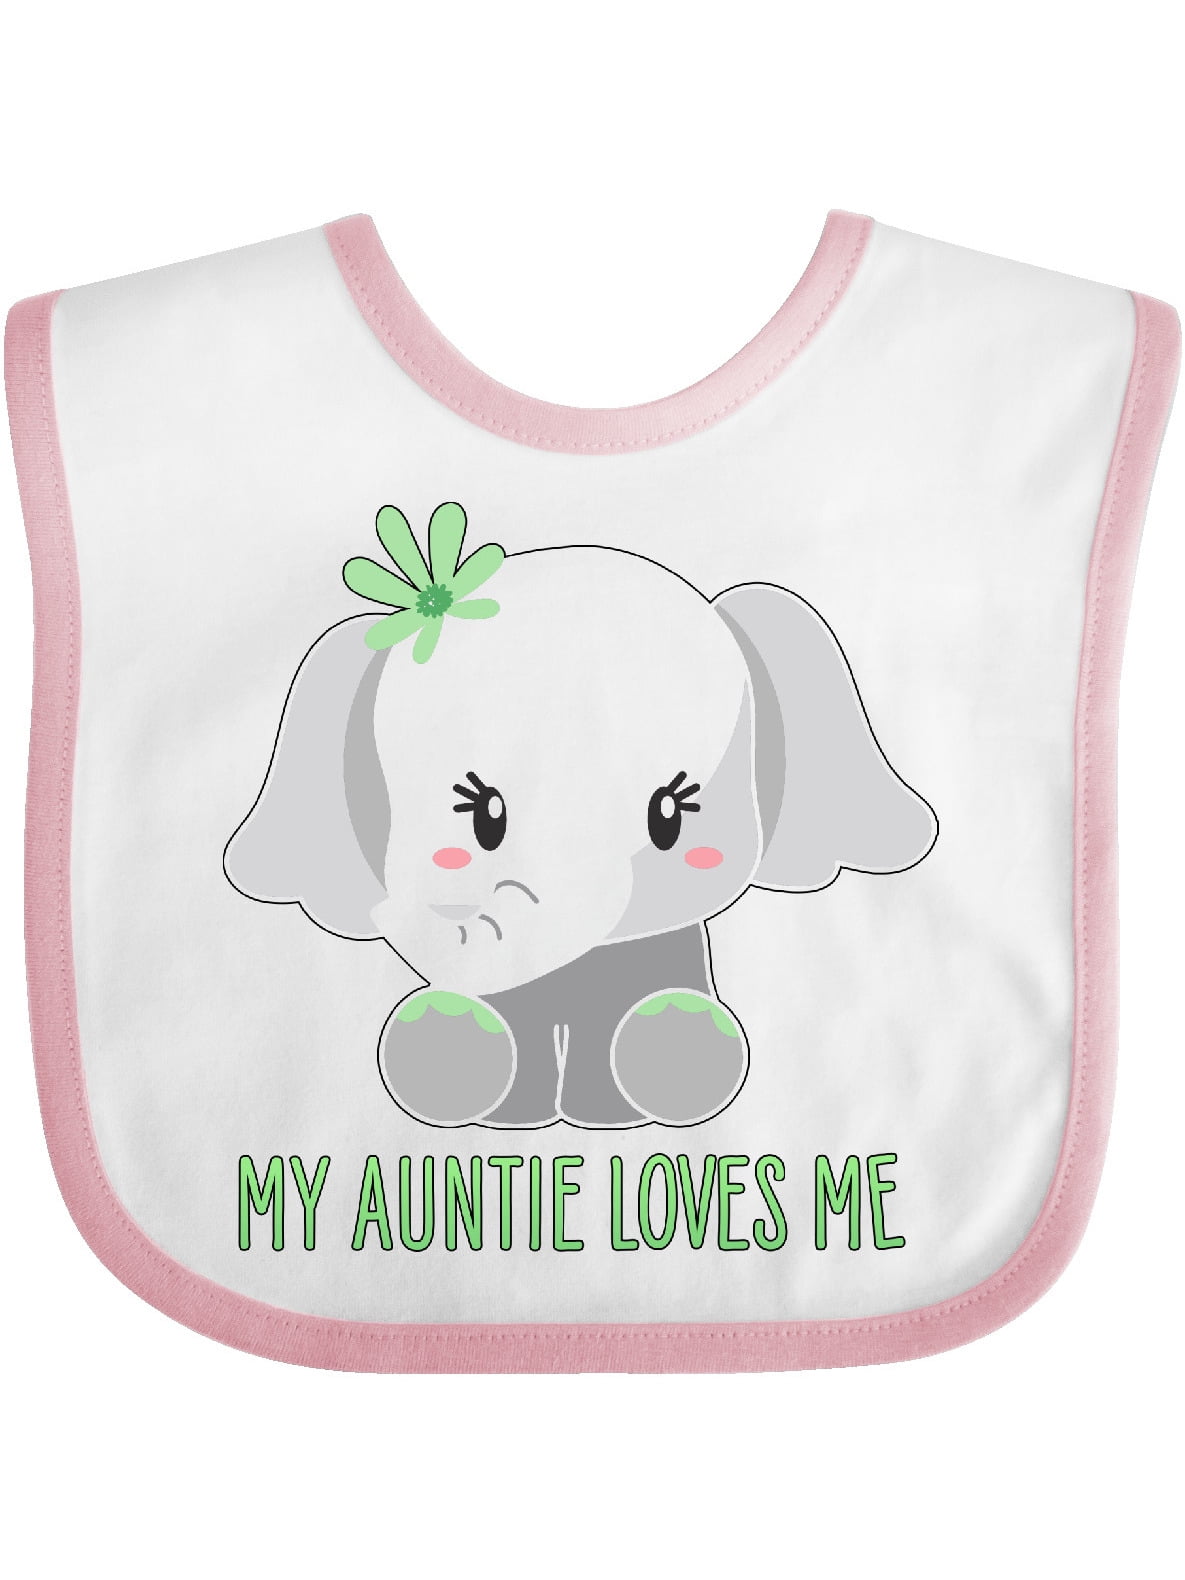 My Auntie Loves Me- cute elephant Baby Bib - Walmart.com - Walmart.com